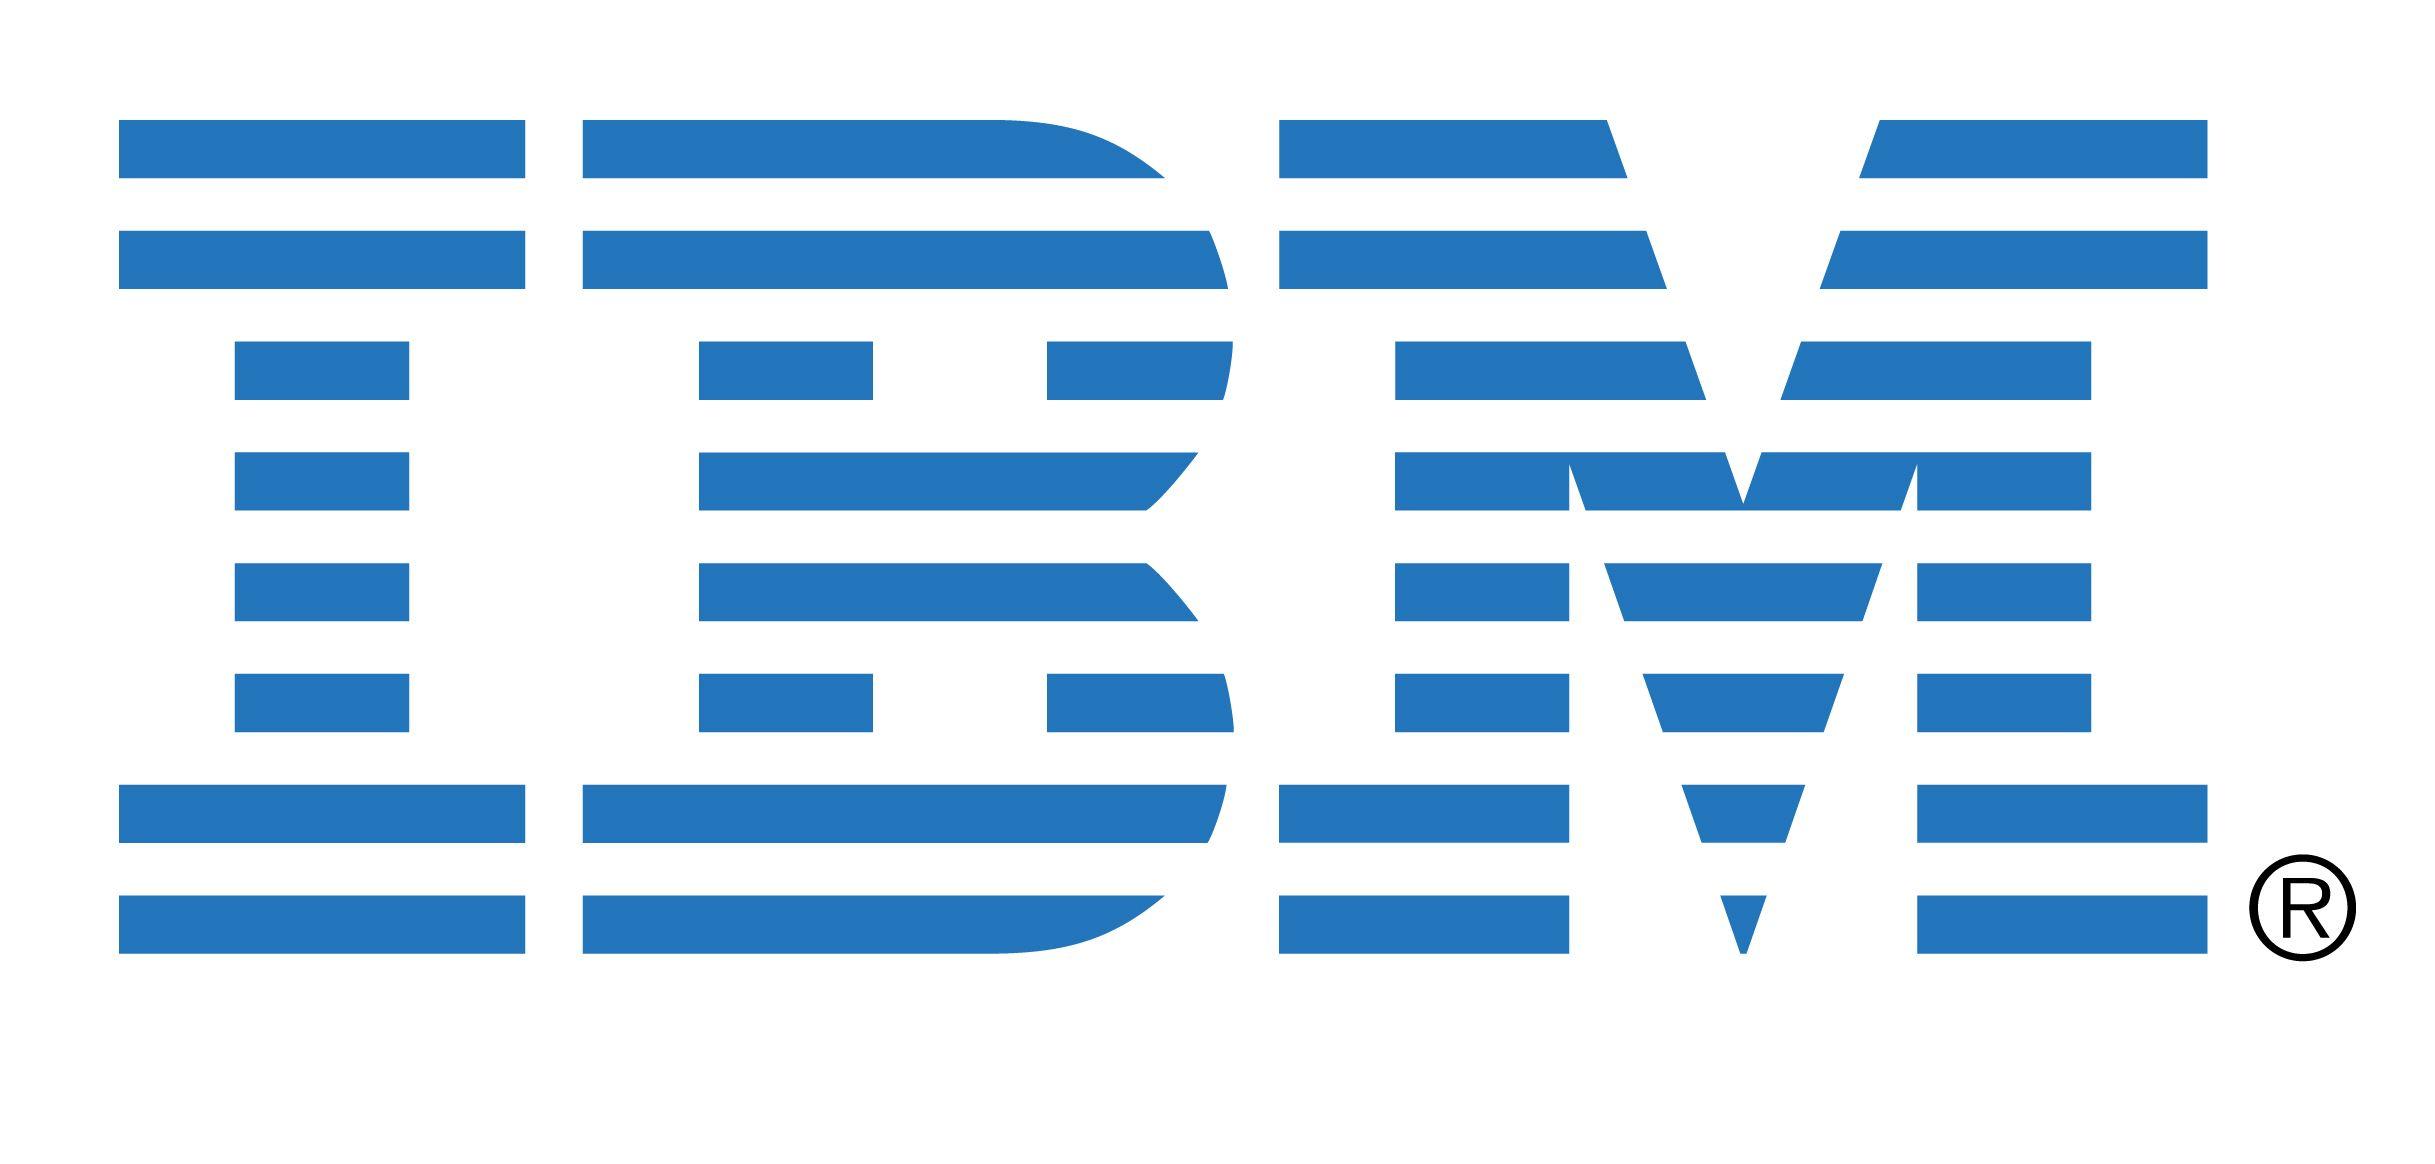 IBM Corporation Logo - Is International Business Machines Corporation a Buy? - The Motley Fool